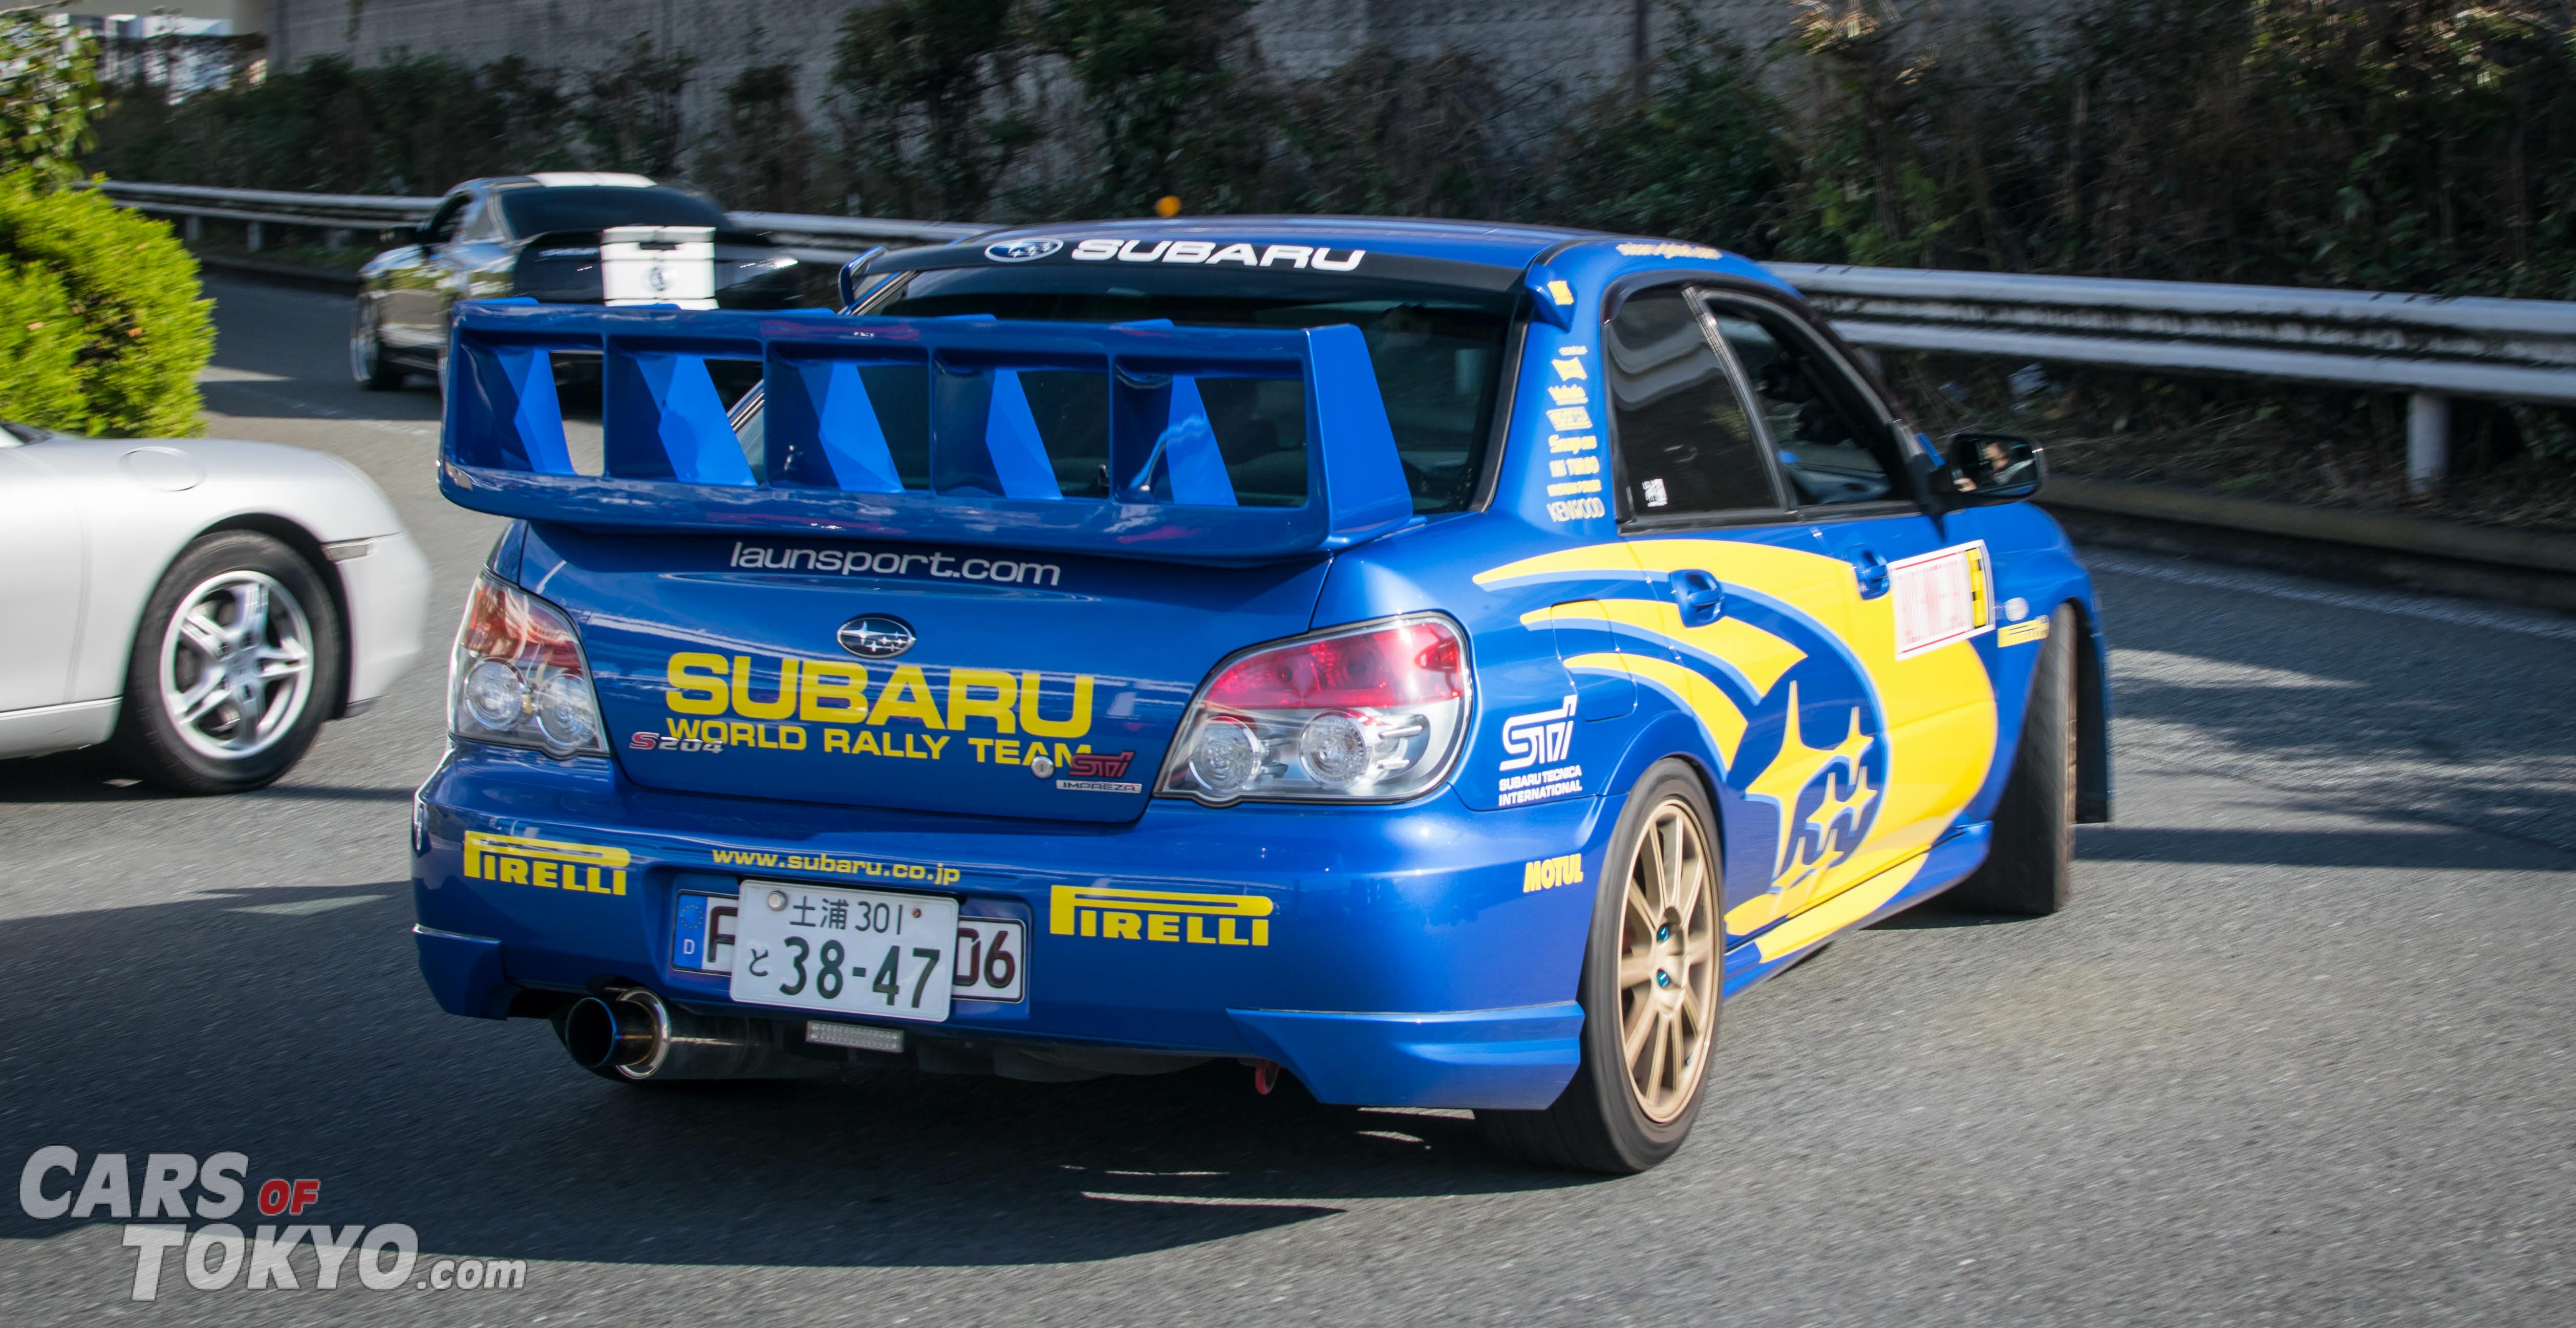 Cars of Tokyo Subaru Impreza WRX STi